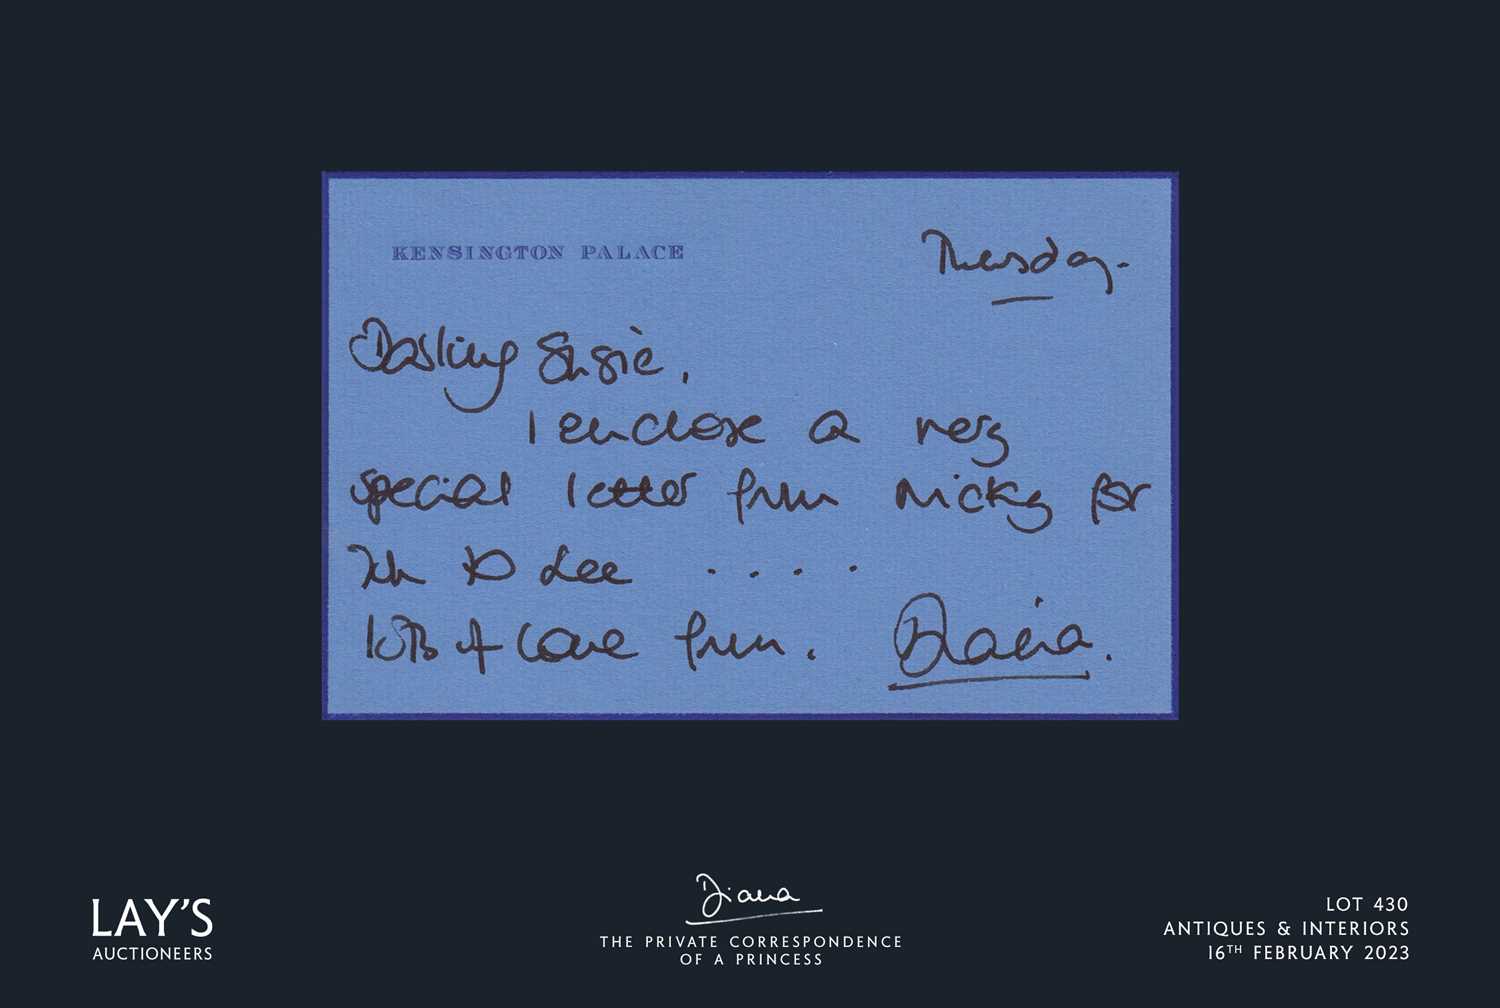 Lot 430 - Diana - The Private Correspondence of a Princess